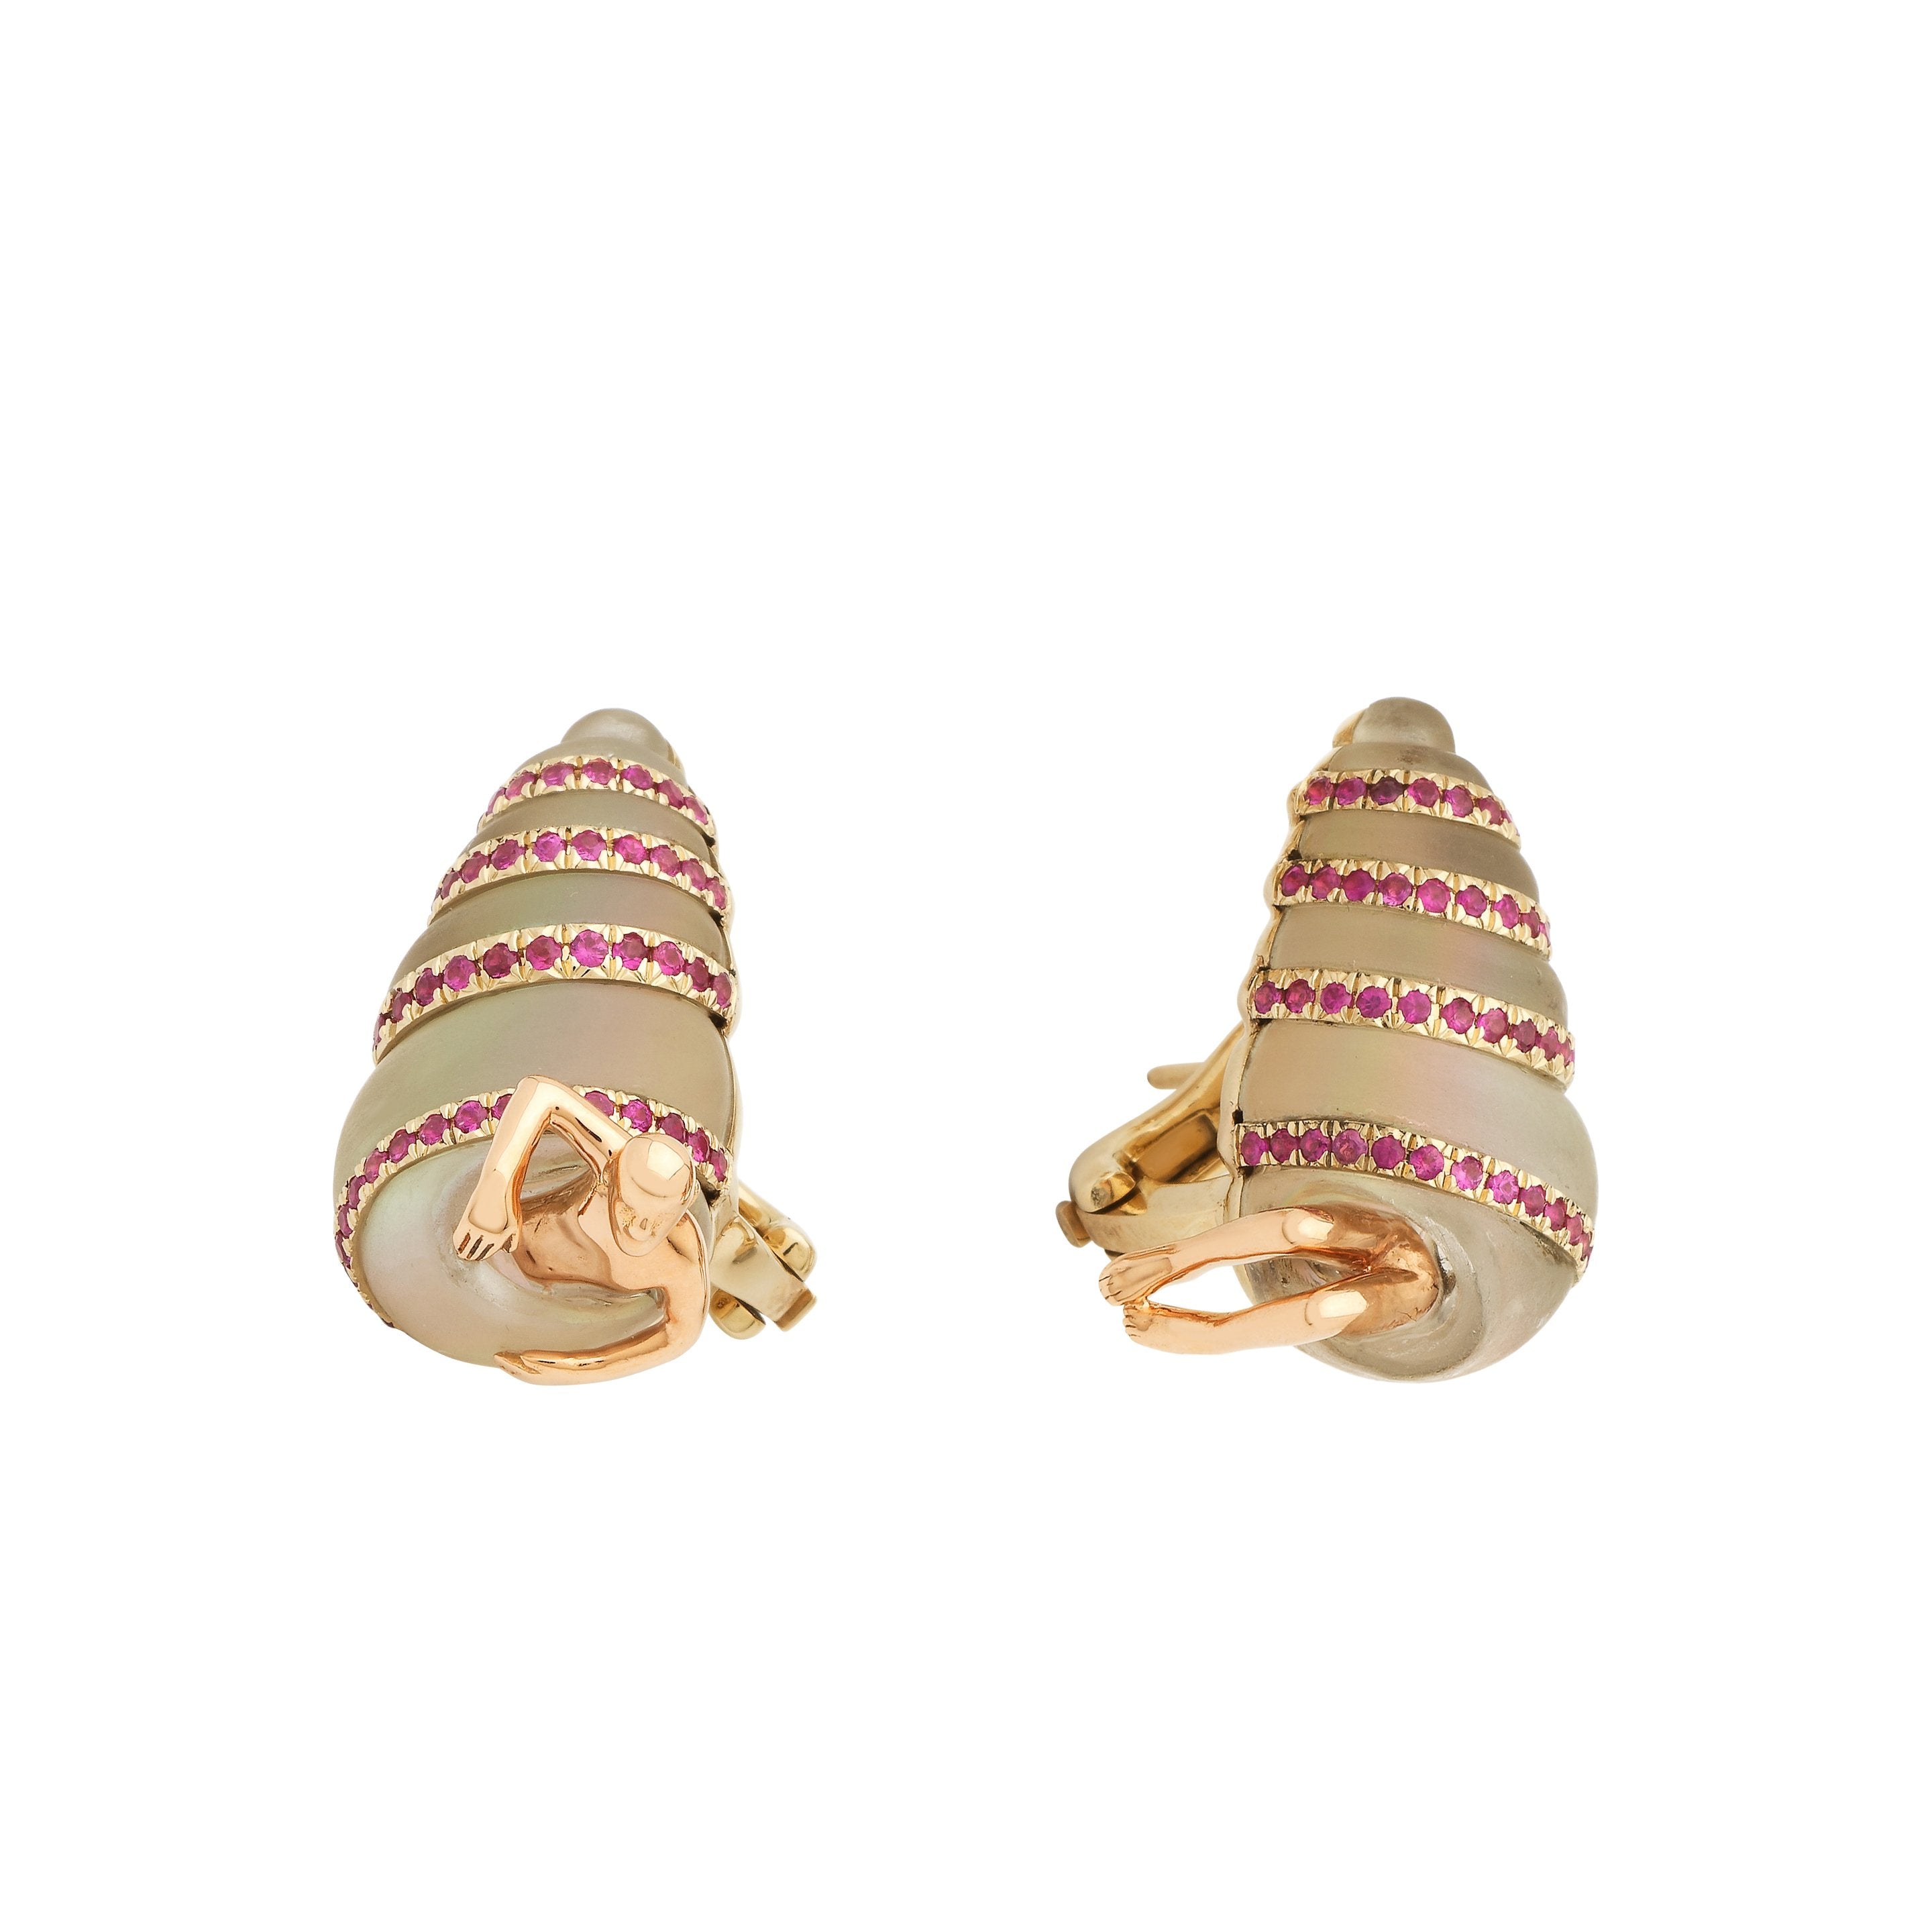 Authentic Louis Vuitton earrings 18K rose gold pink shell earrings